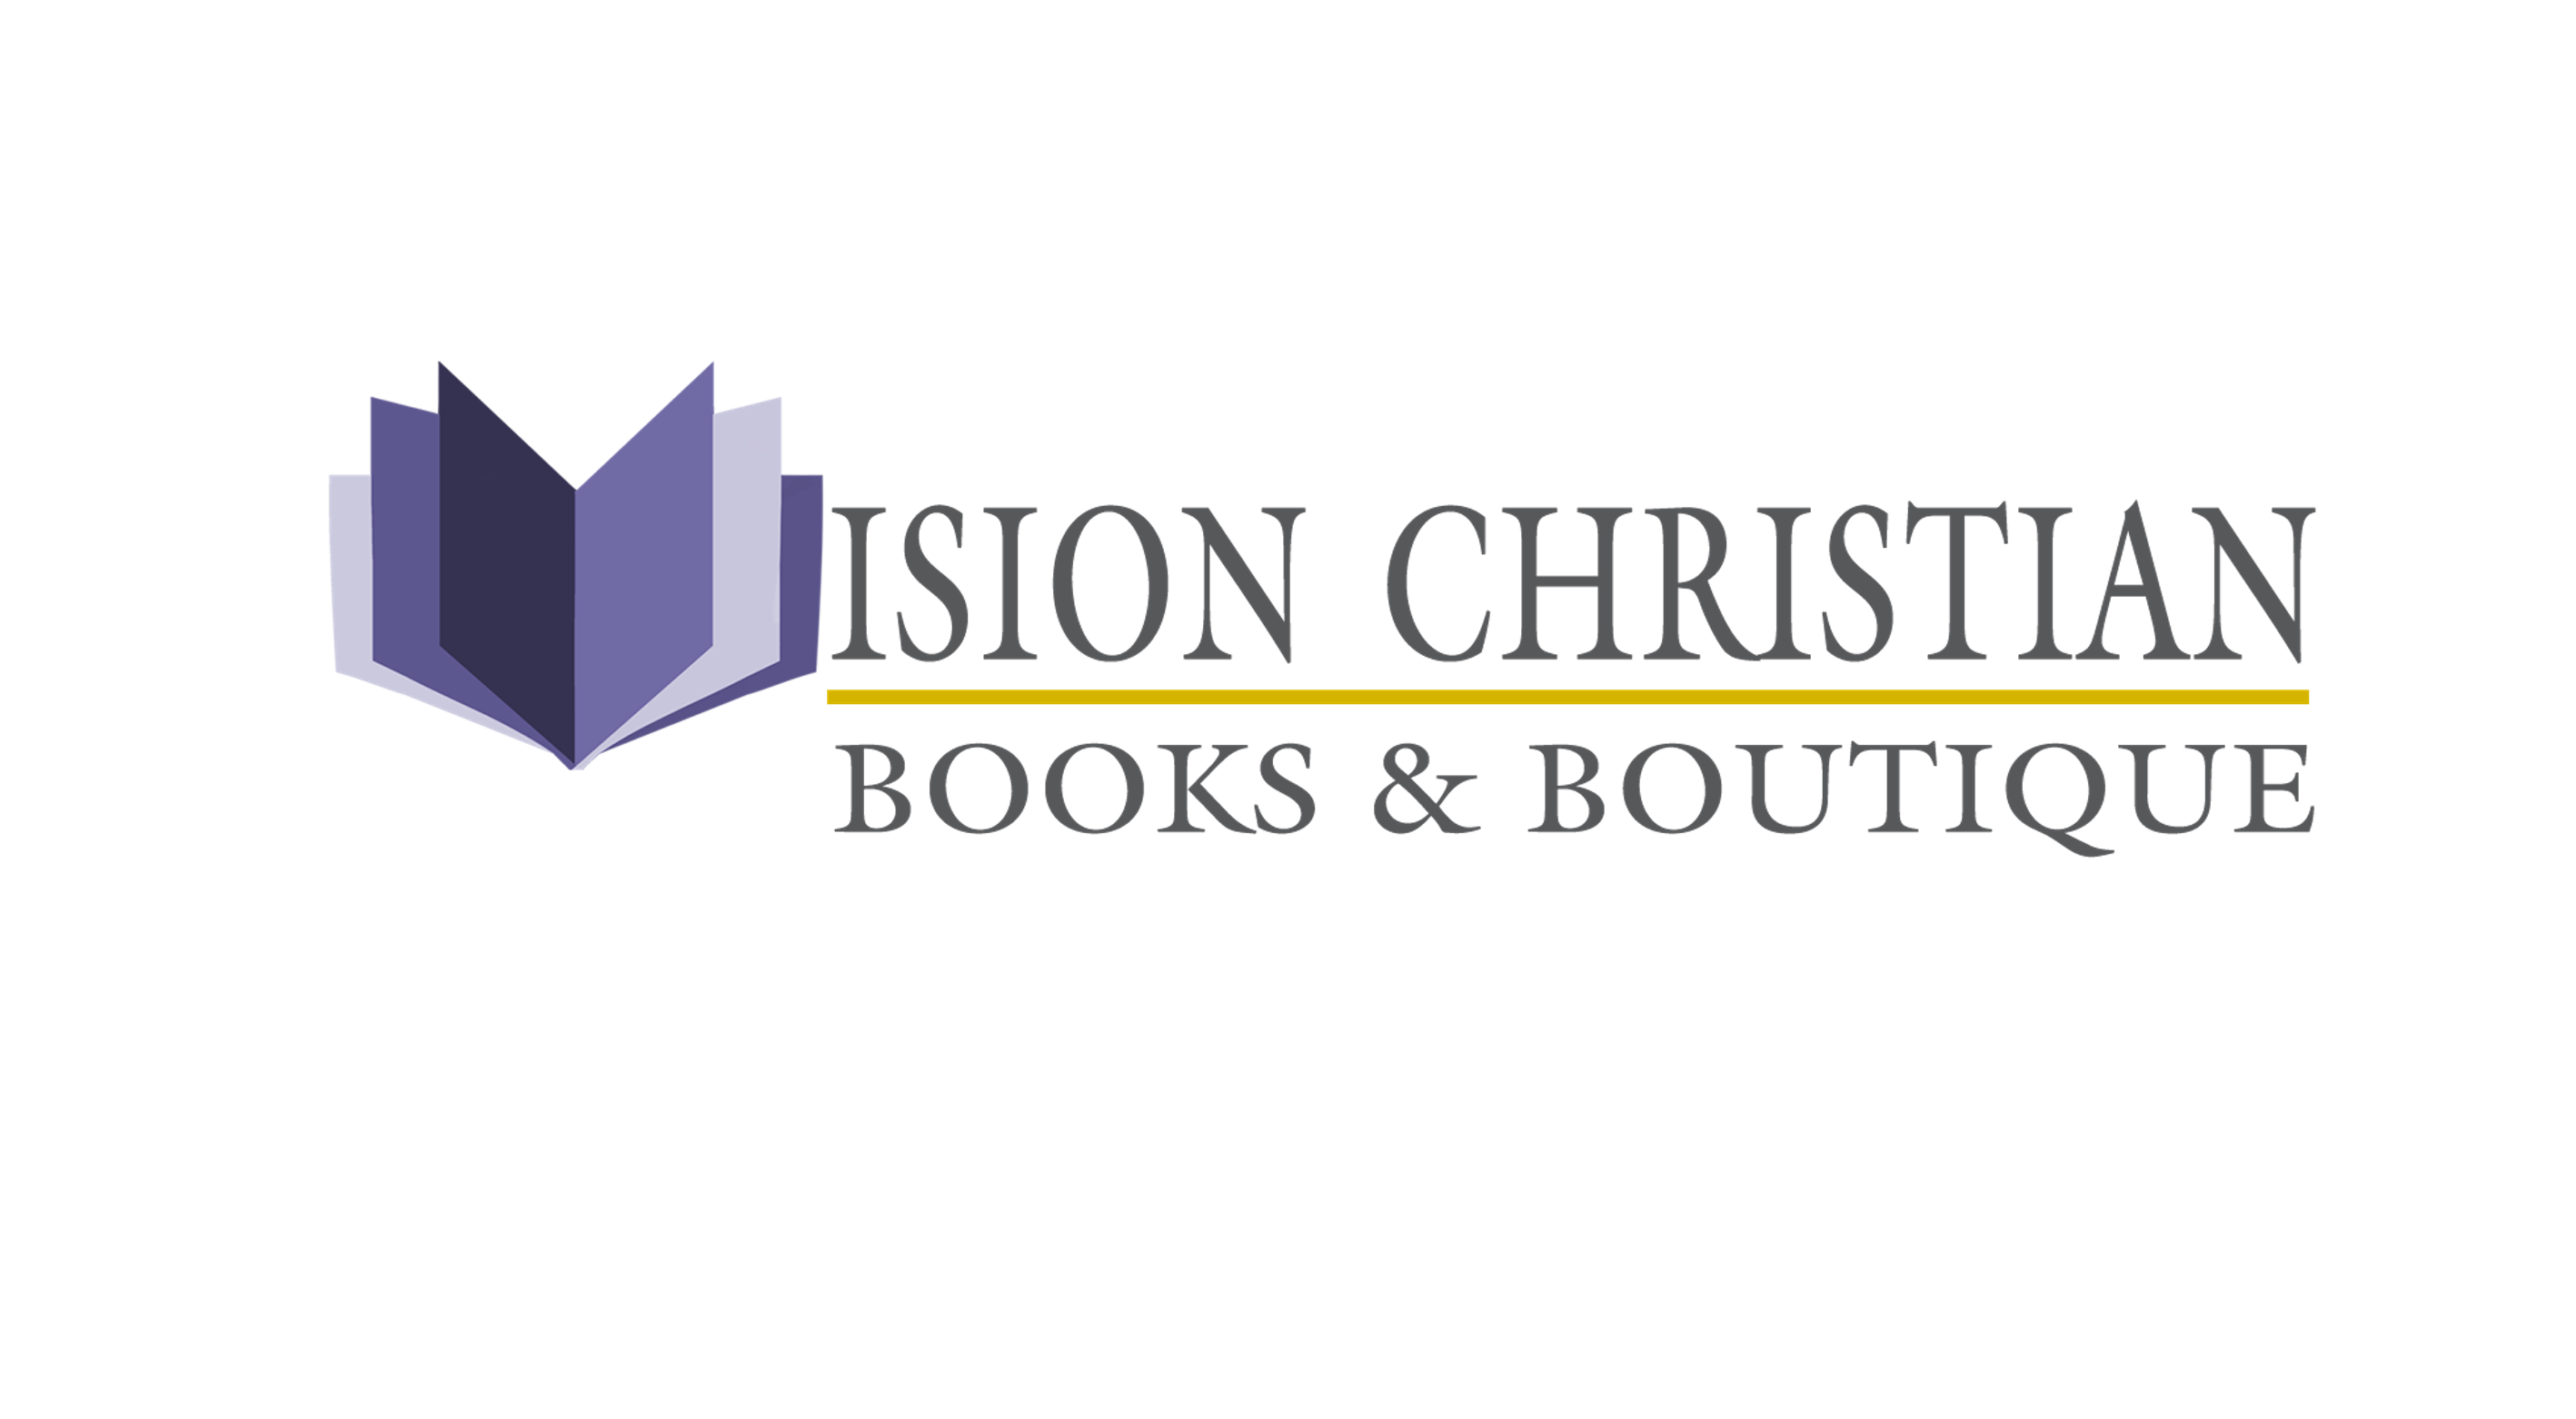 Home | Vision Christian Books & Boutique